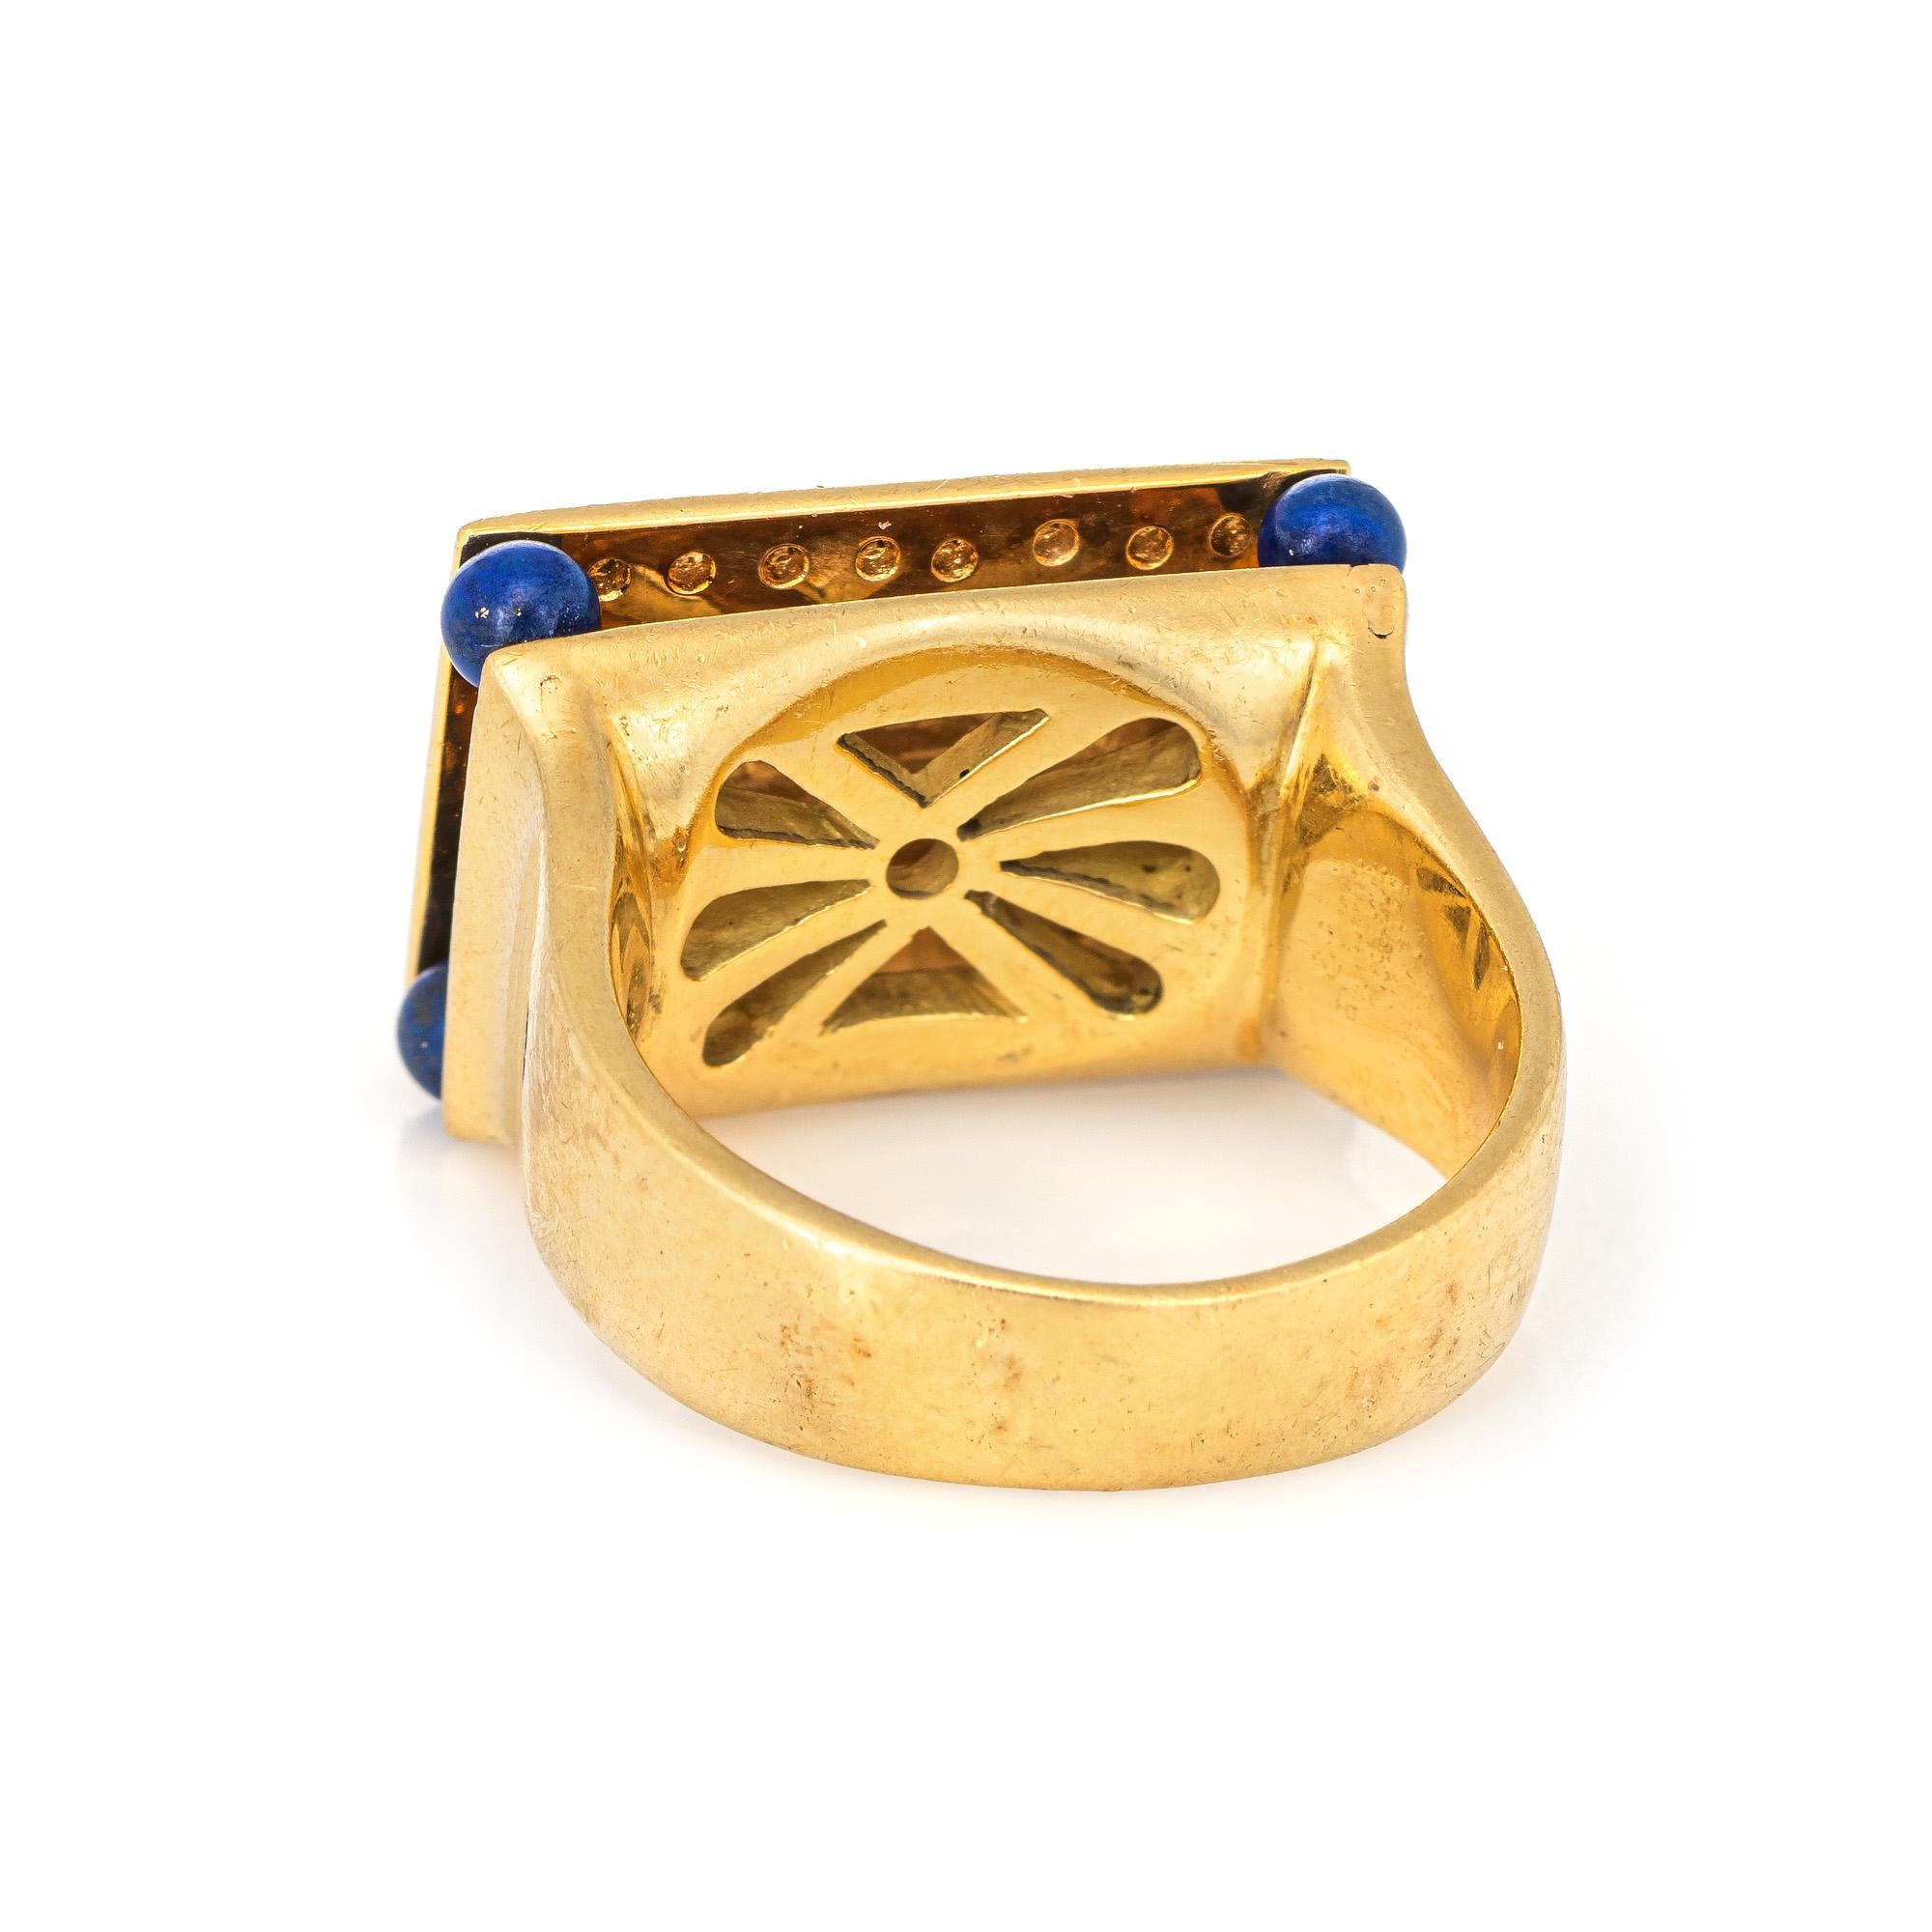 Round Cut Lapis Lazuli Diamond Temple Ring Vintage 18k Yellow Gold Square Mount Jewelry